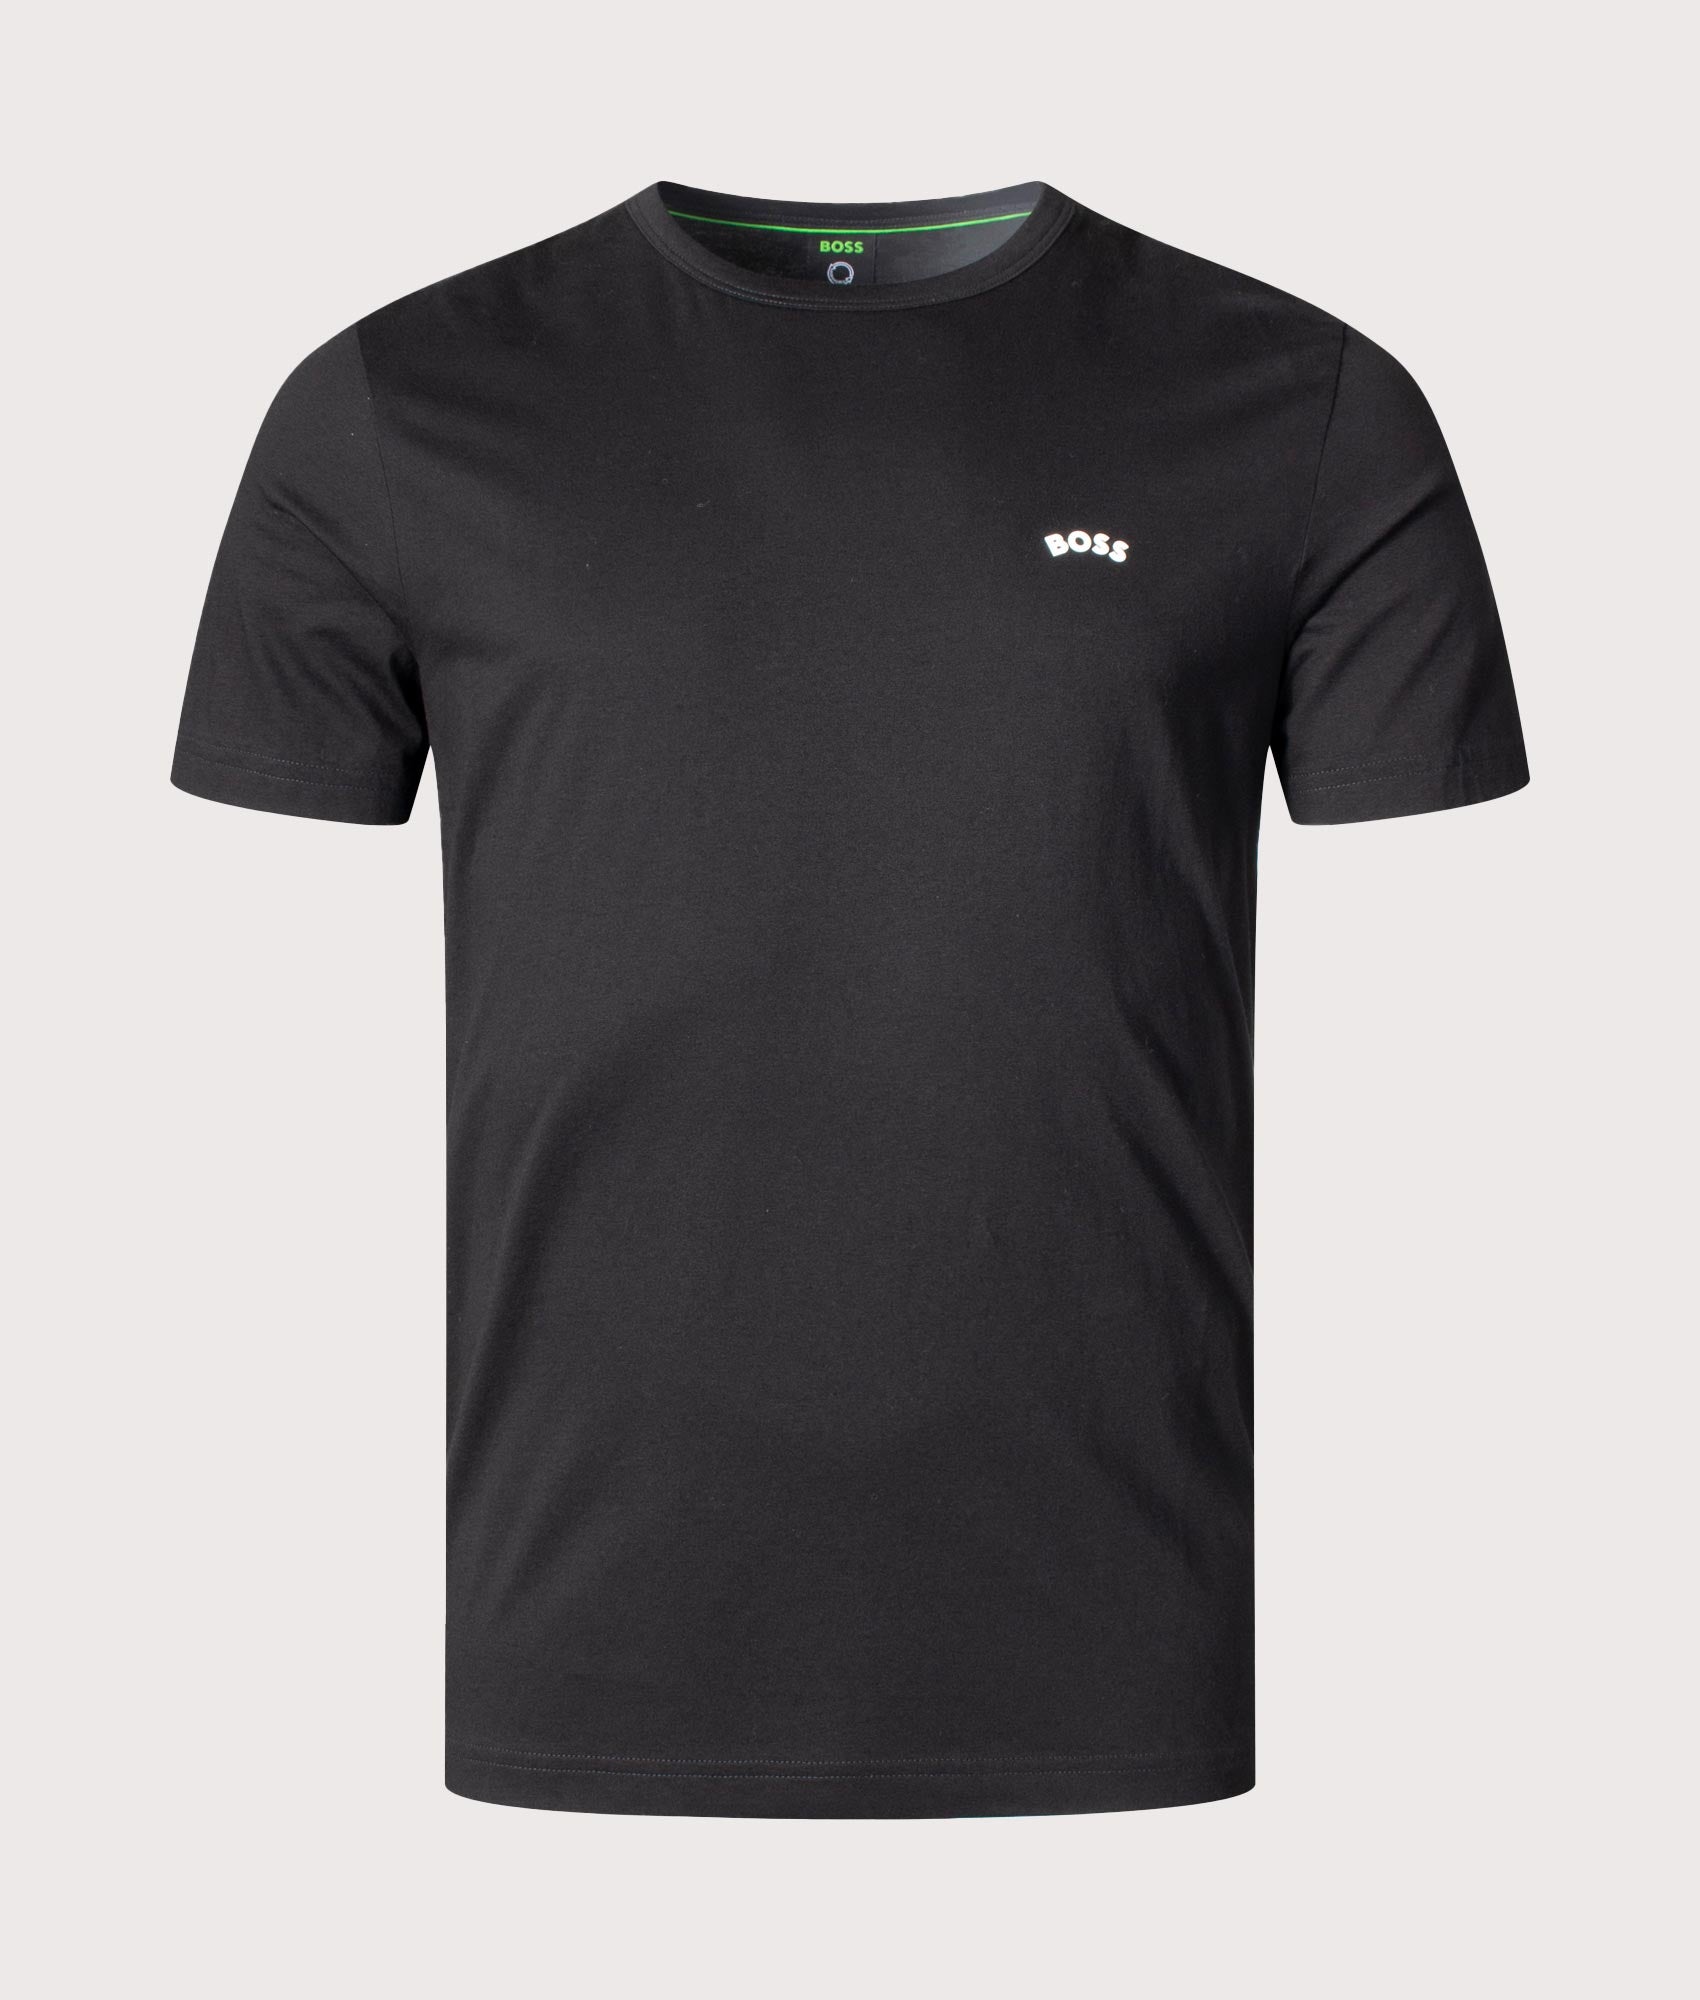 BOSS Mens Curved Logo T-Shirt - Colour: 001 Black - Size: Large